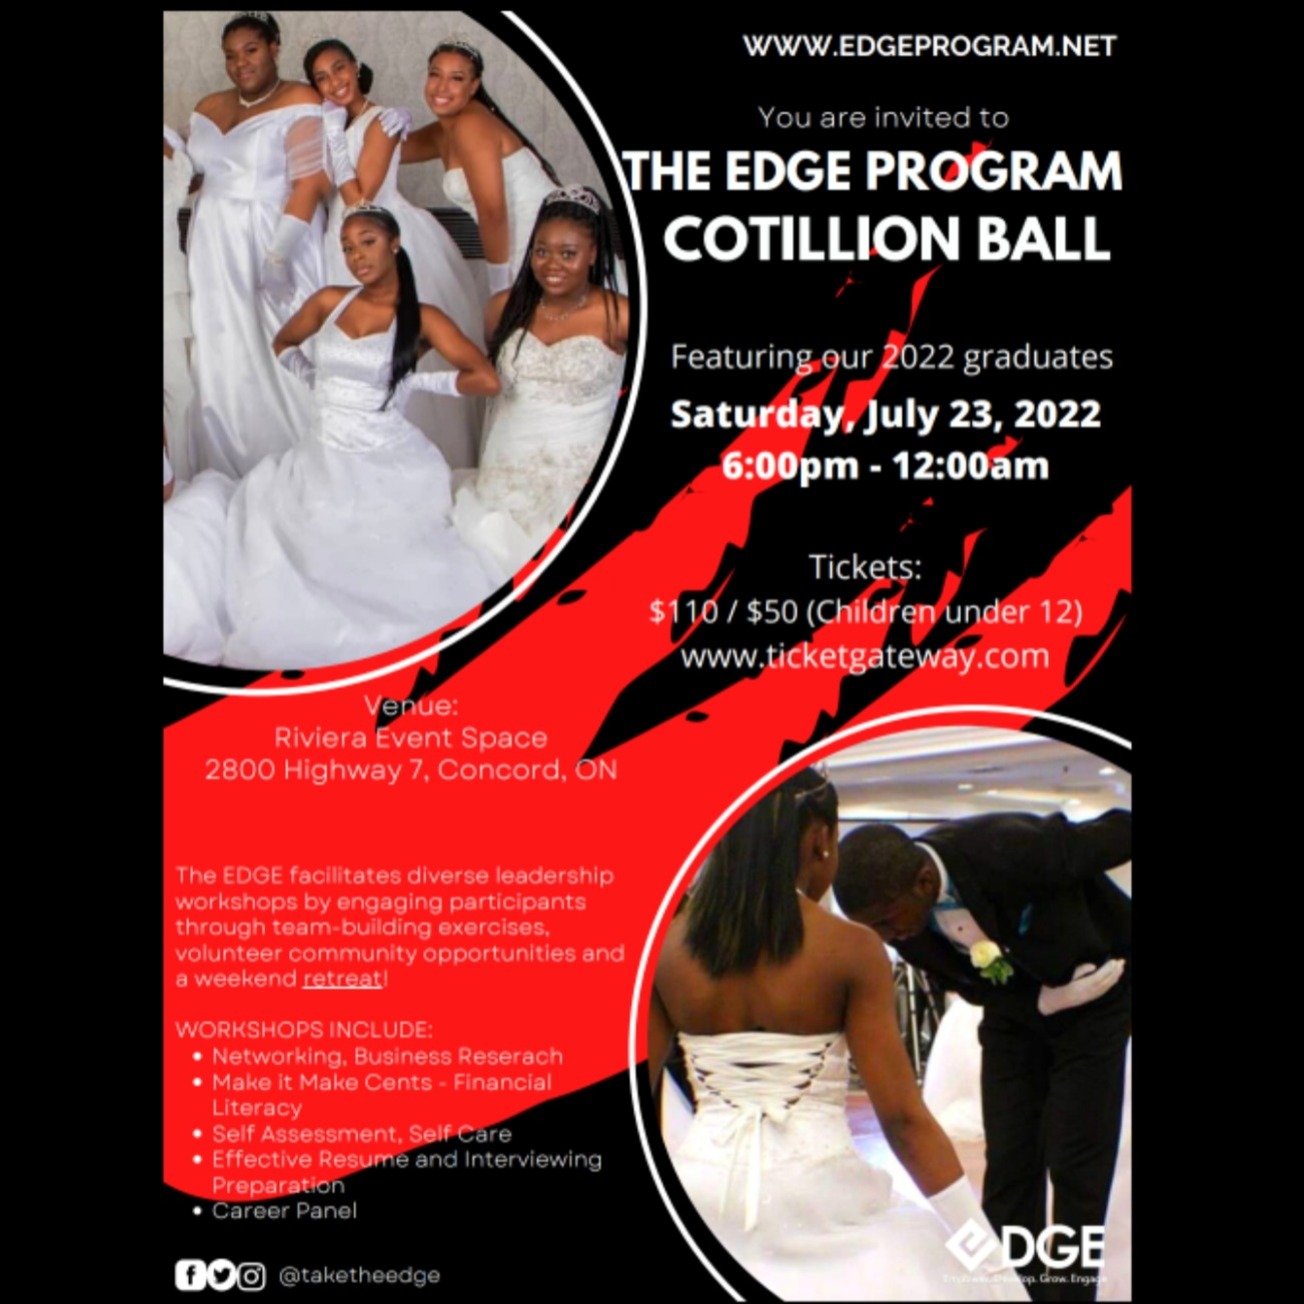 The Edge Program Cotillion Ball